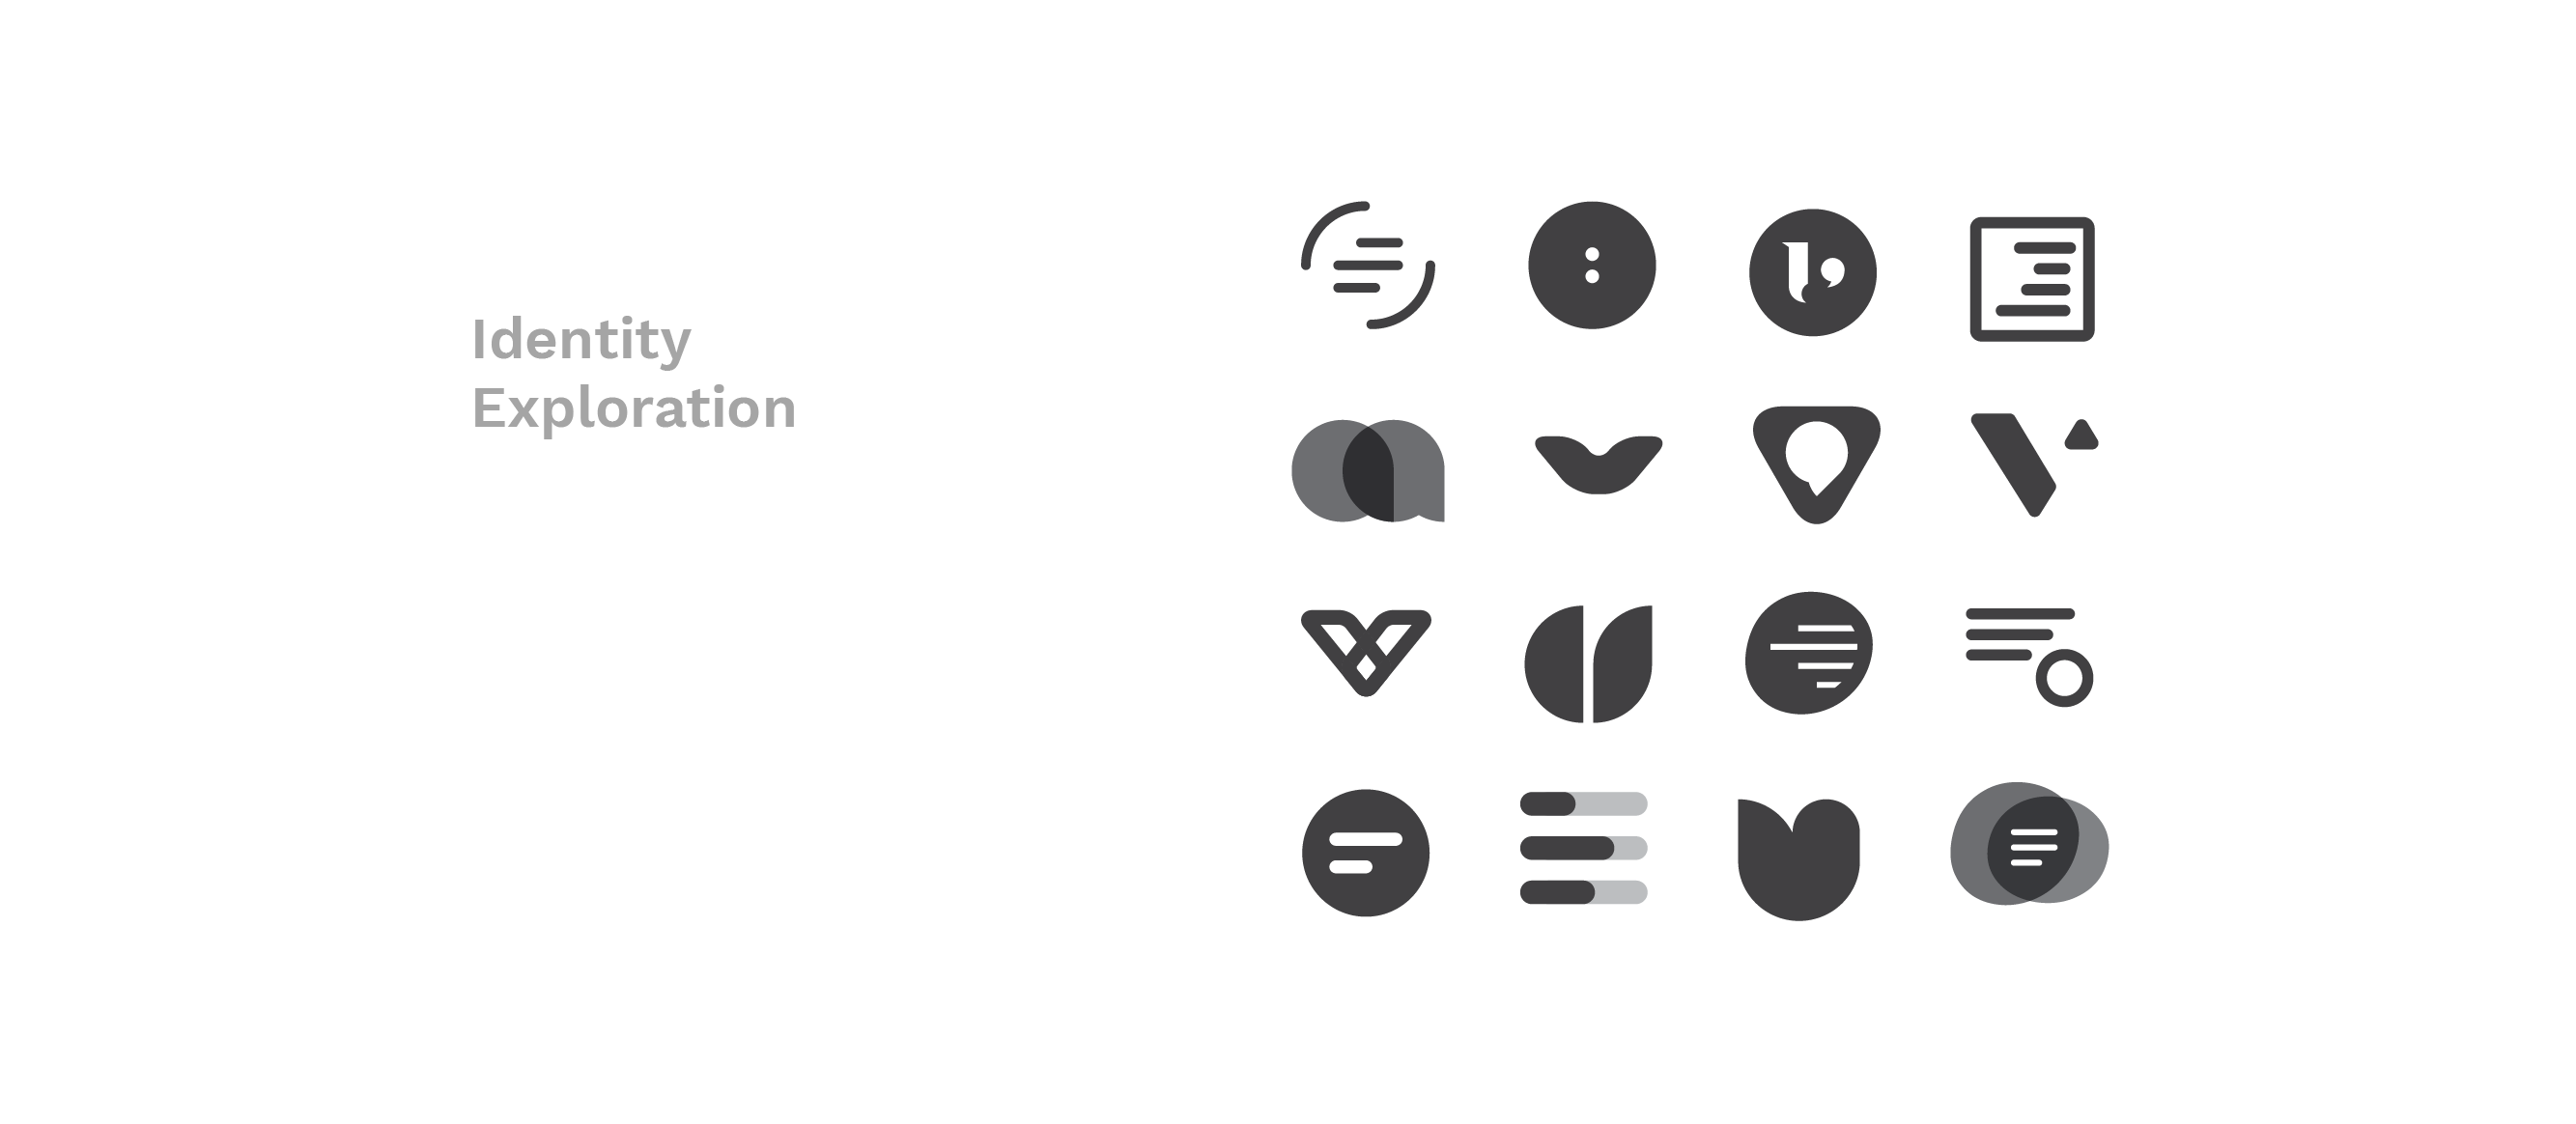 image of explorations of potential verblio logo design